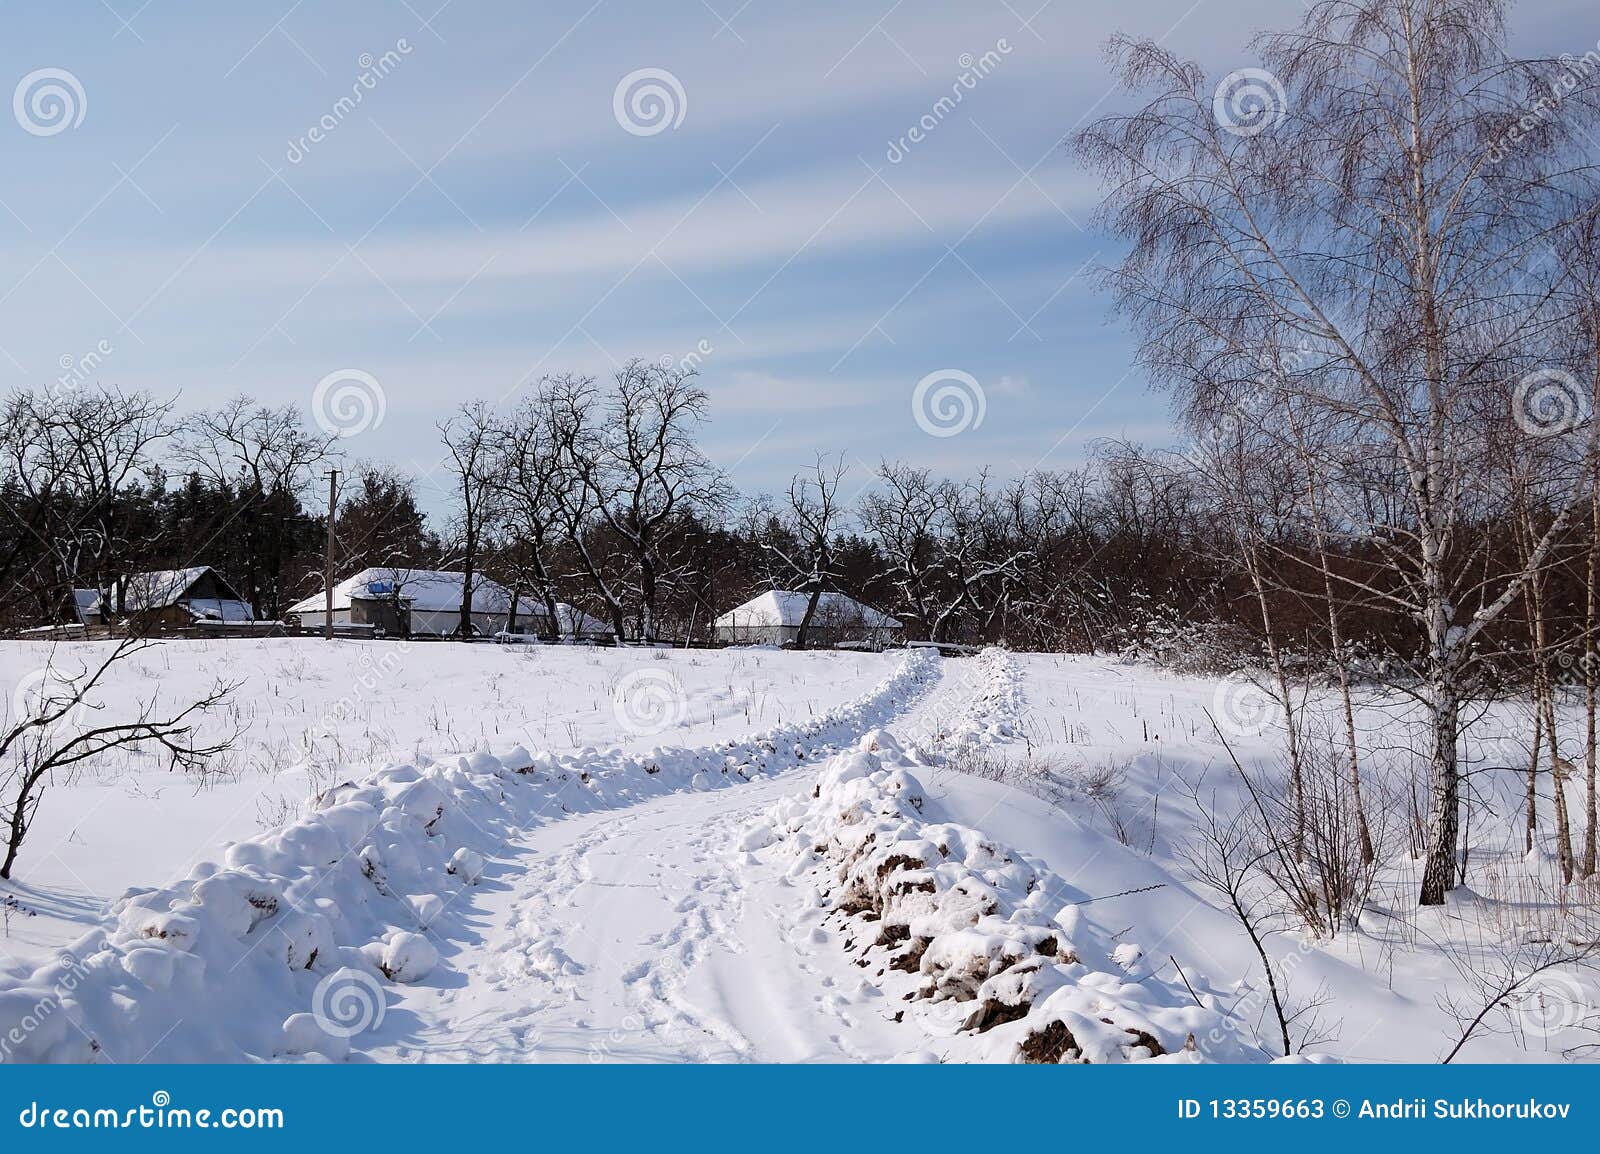 Winter Sun Day Stock Photos - Image: 13359663